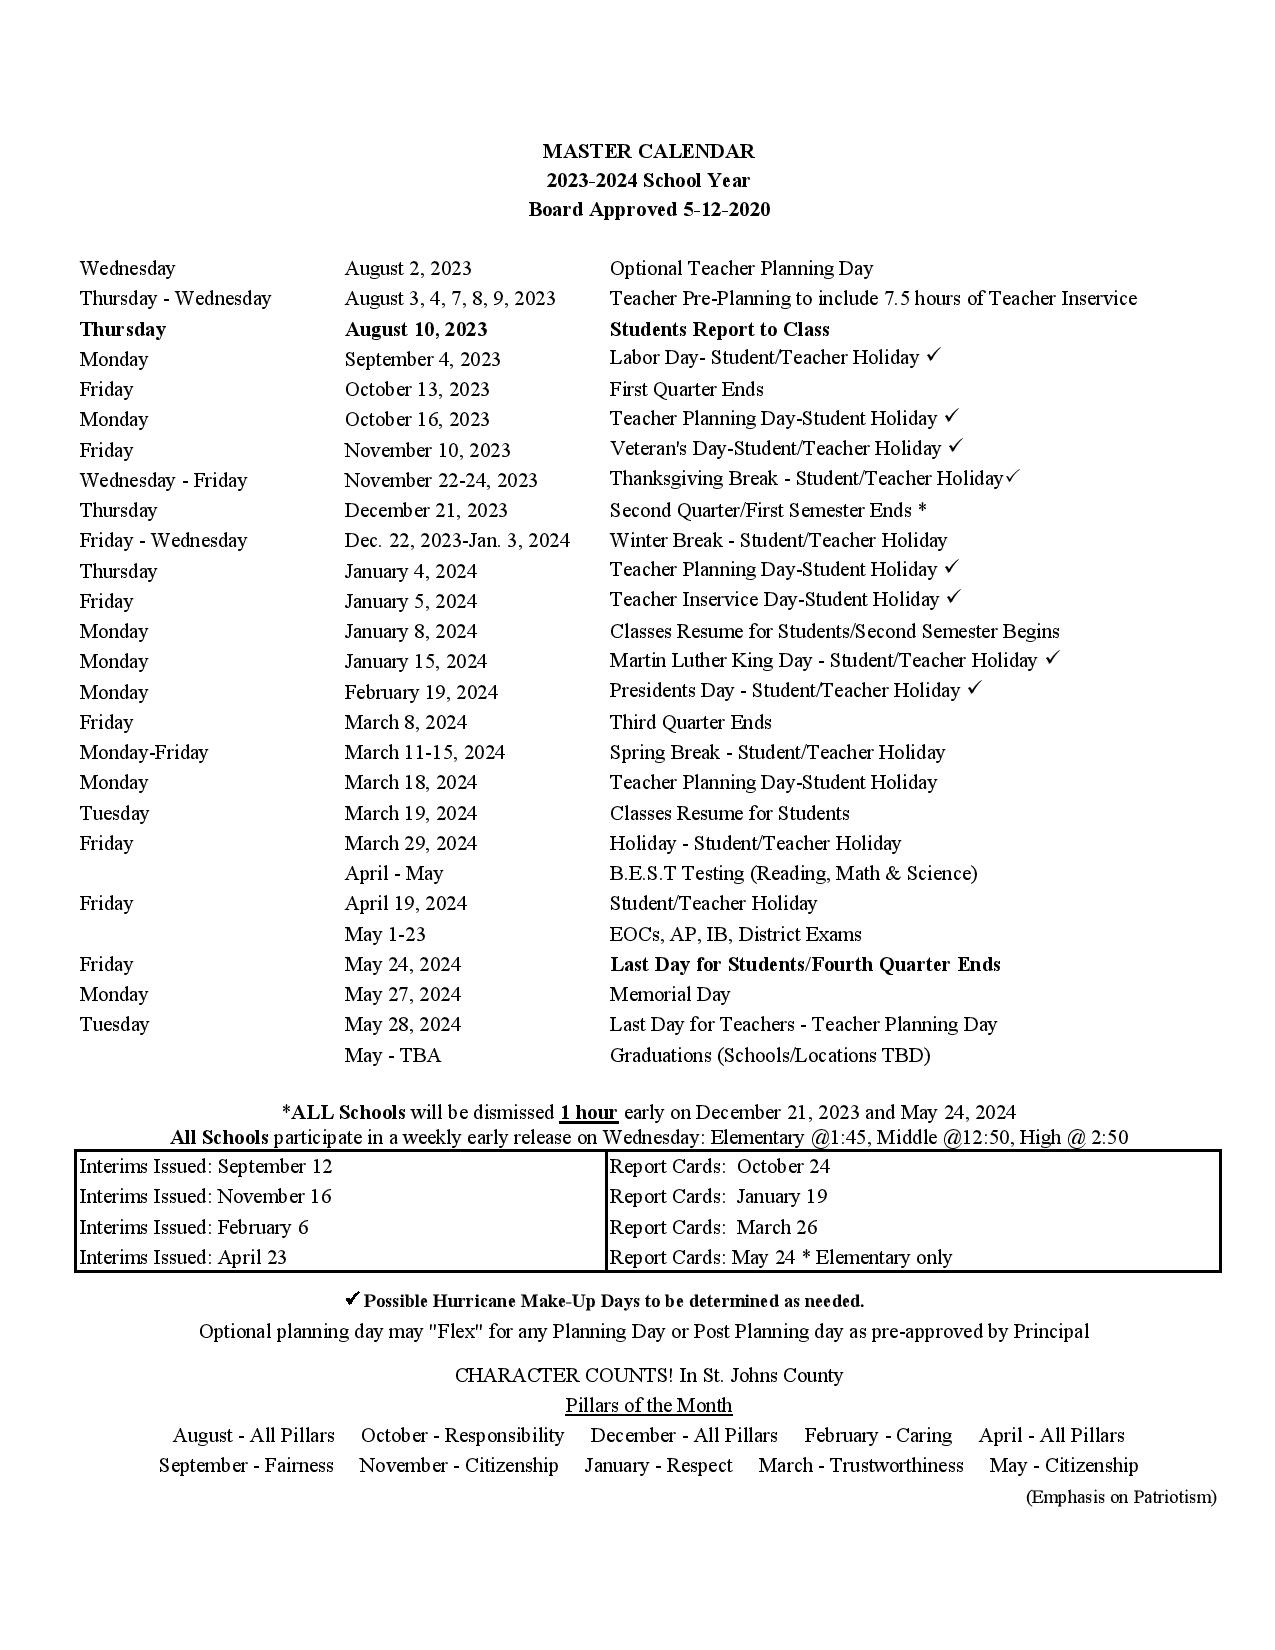 St Johns County School District Calendar Holidays 20232024 PDF